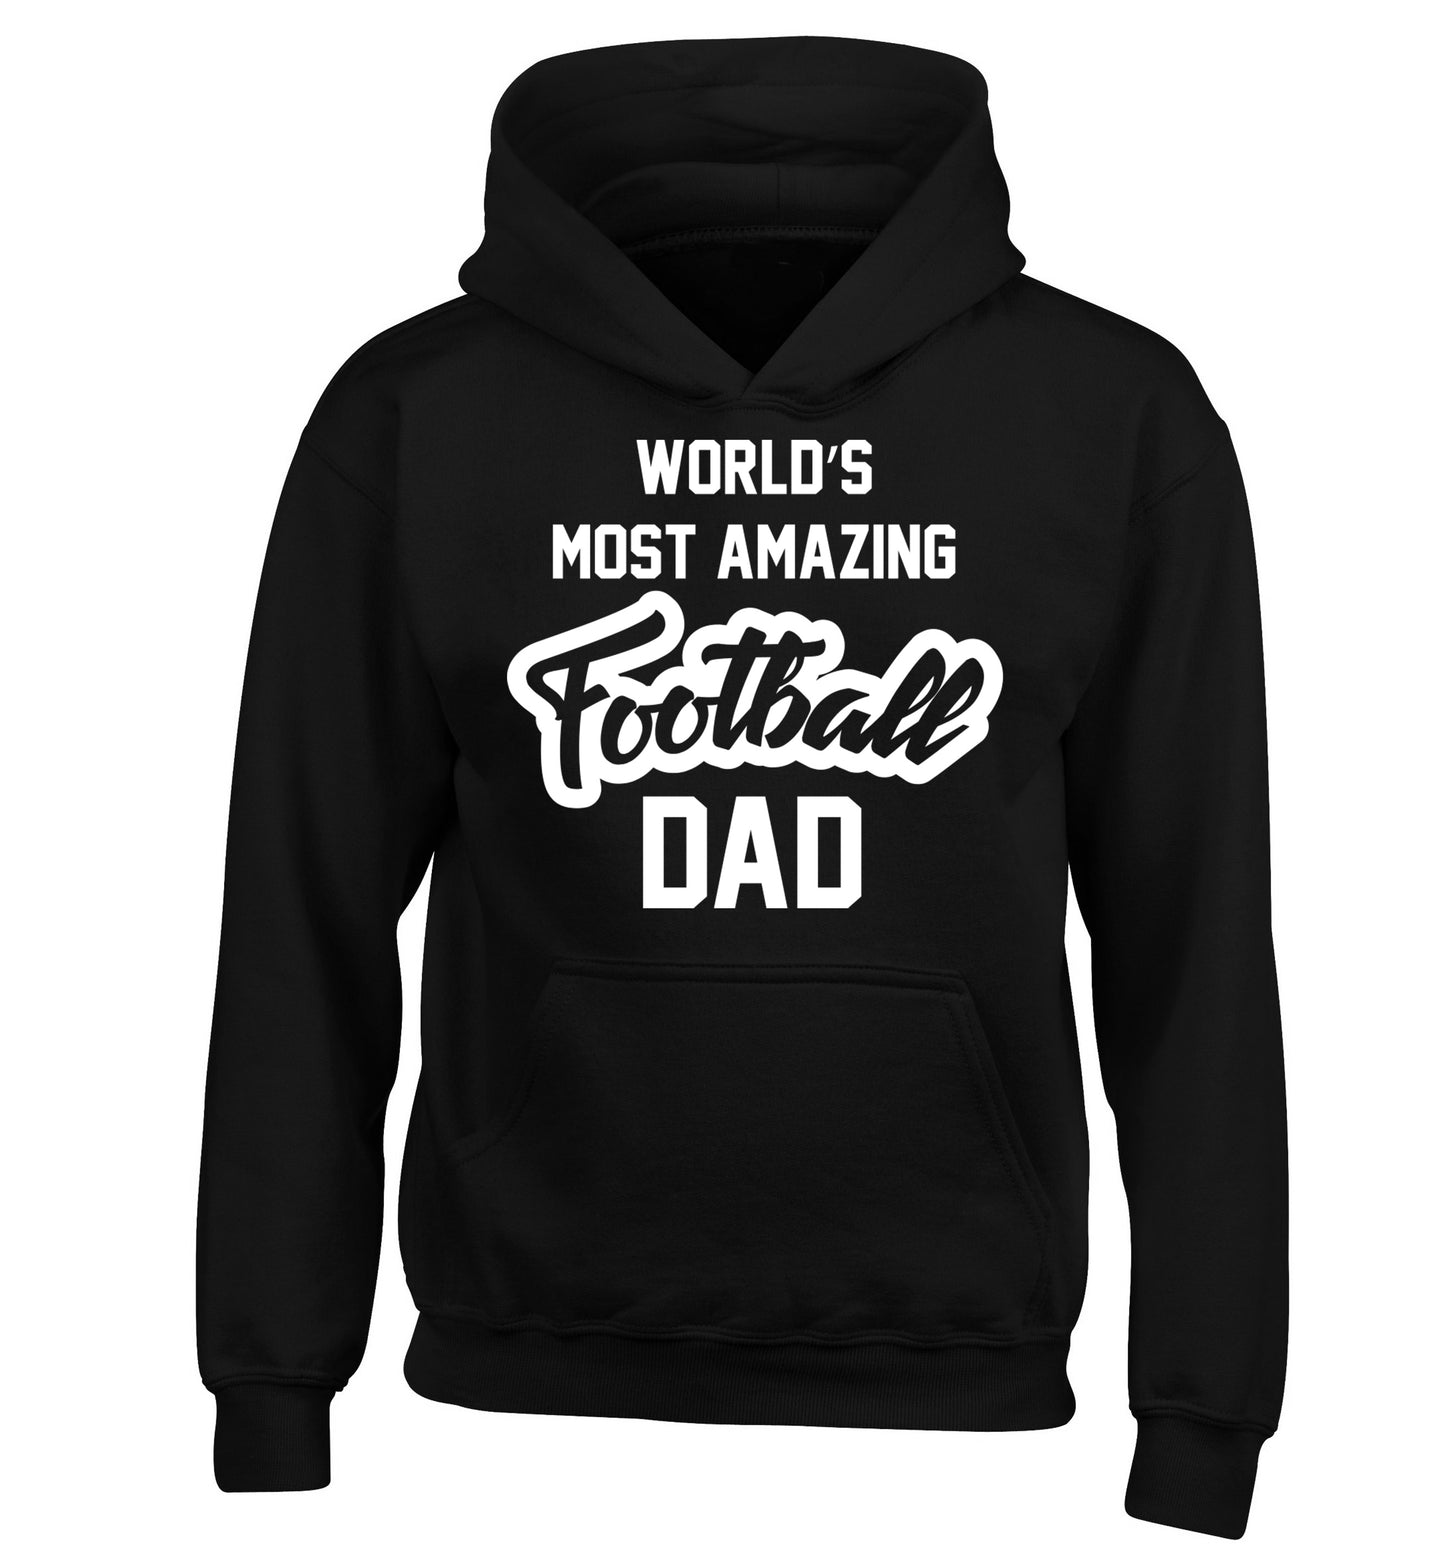 Worlds most amazing football dad children's black hoodie 12-14 Years